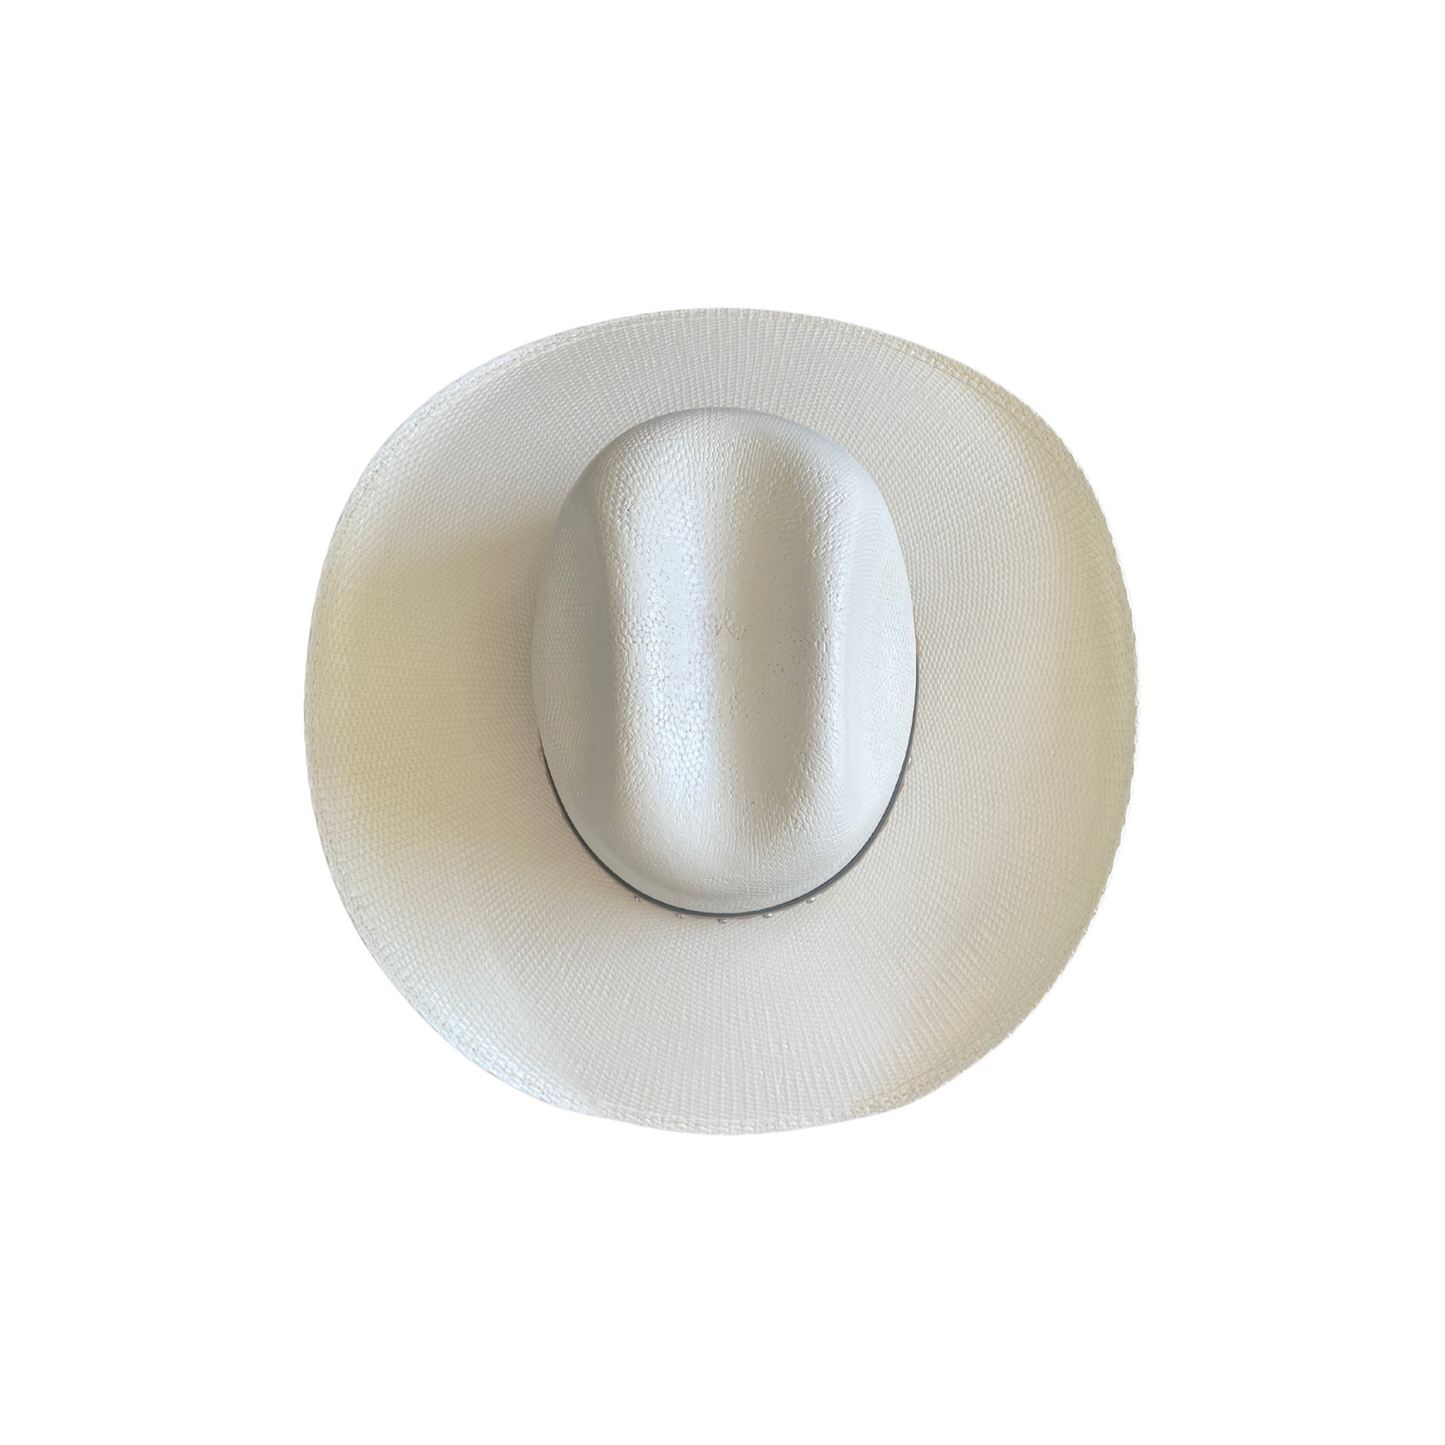 White Straw Western Style Hat